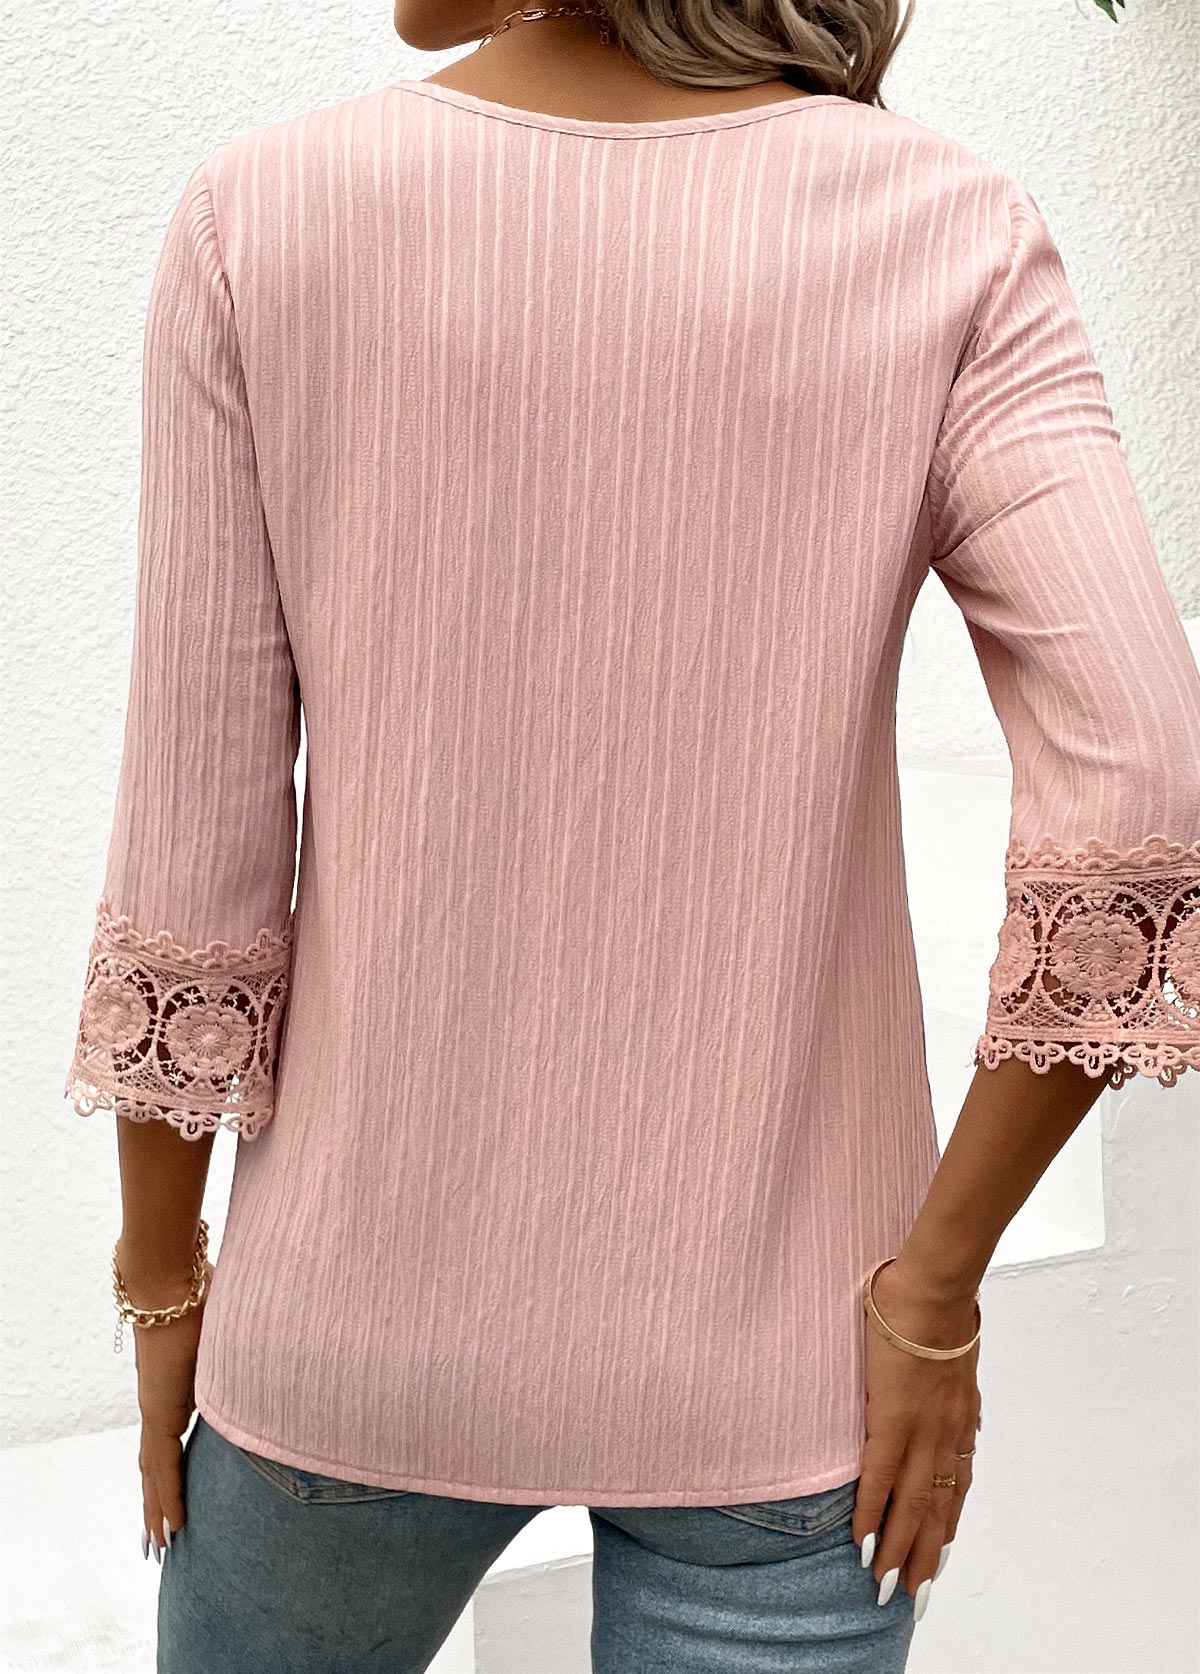 Light Pink Lace Three Quarter Length Sleeve Blouse